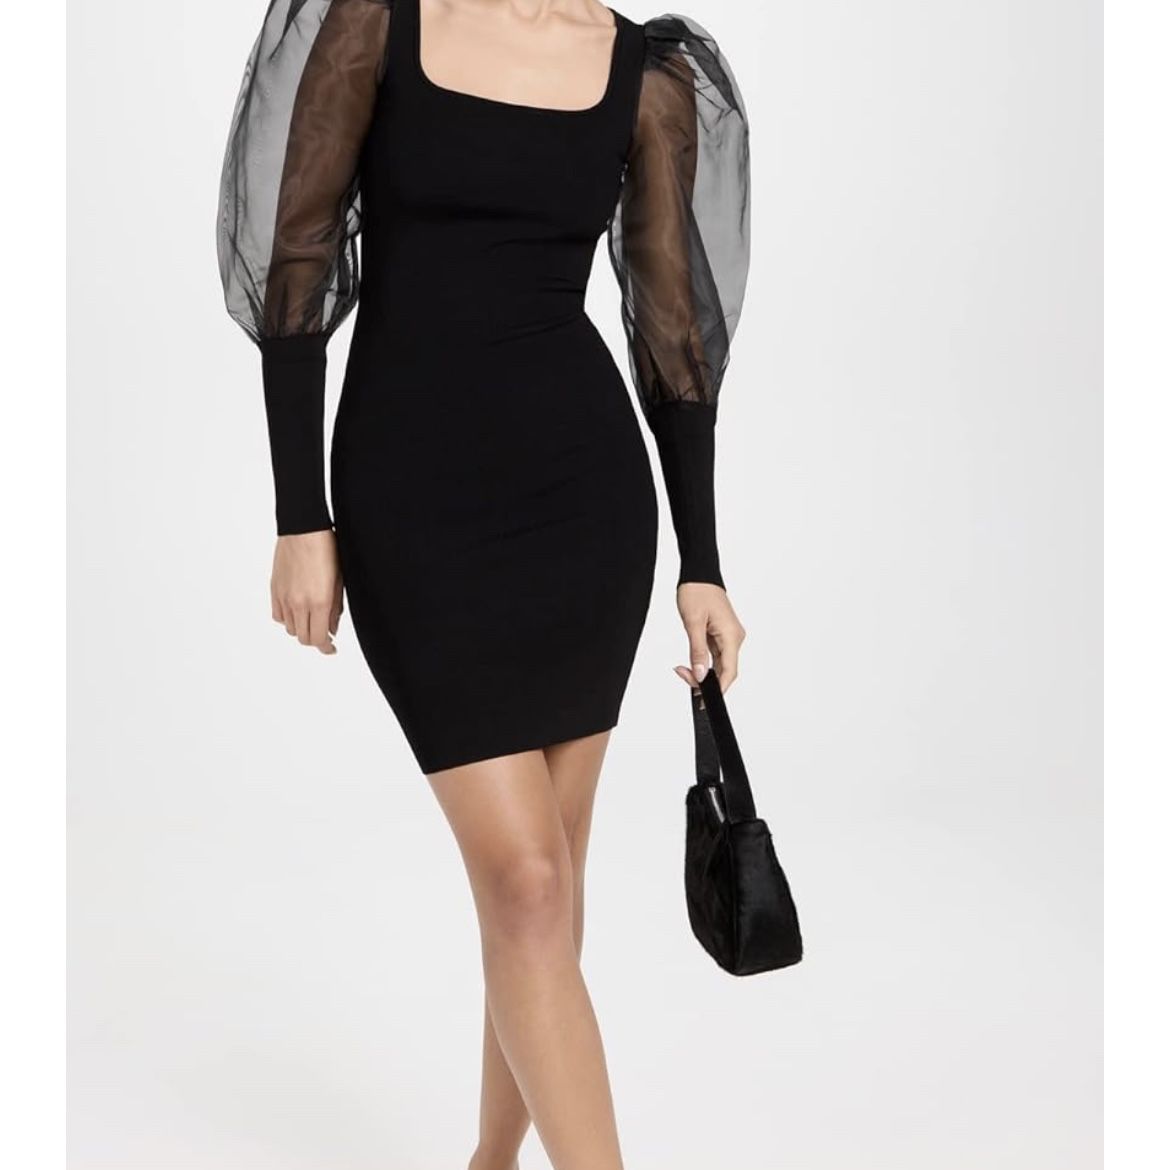 Black Cocktail Dress - Alice & Olivia $85 Size M